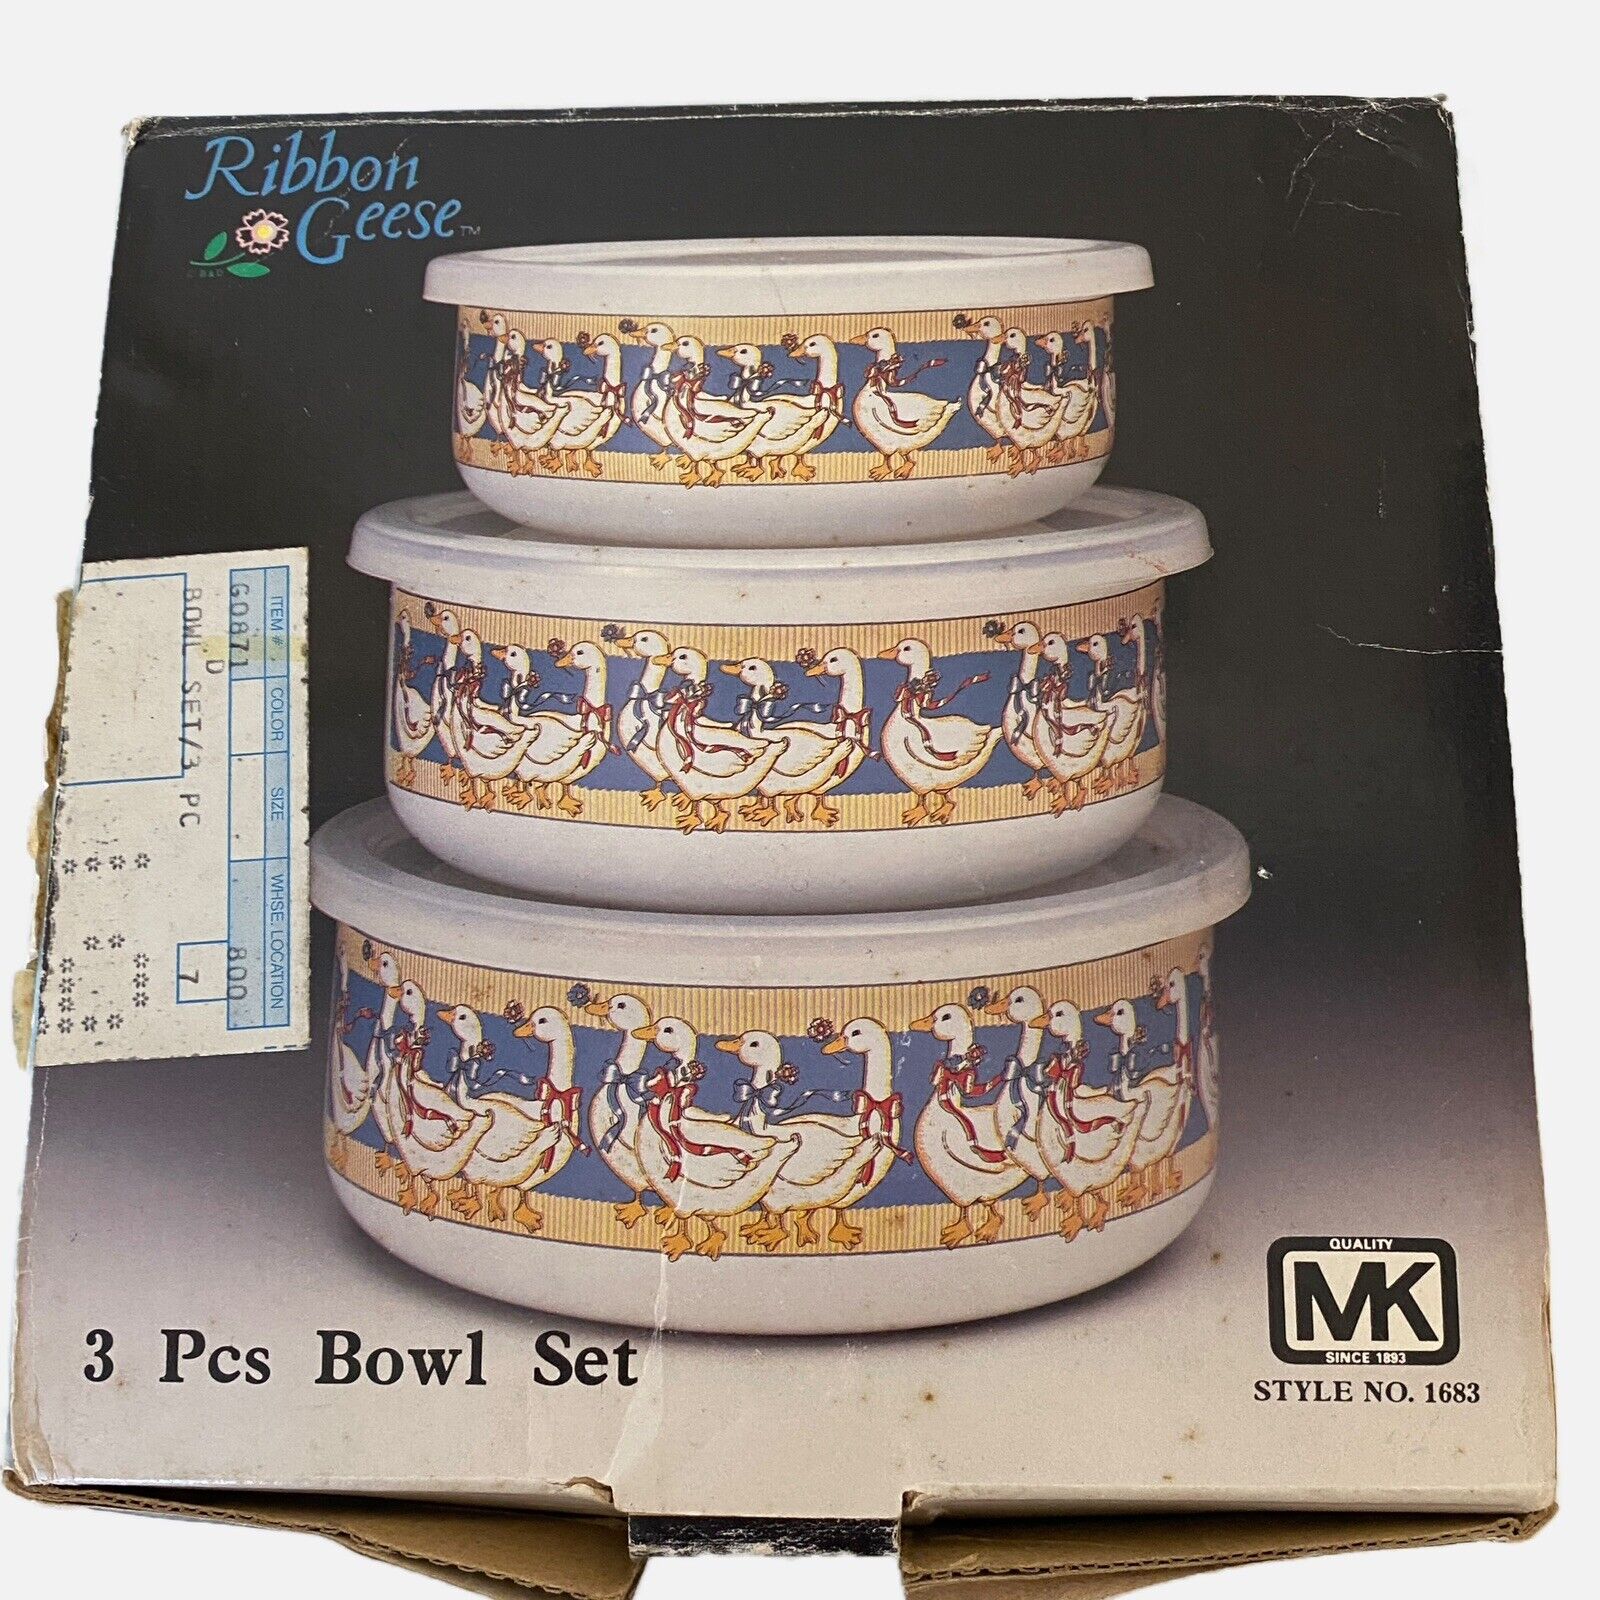 Kamenstein Ribbon Geese 1980s 3 Bowls Lids Porcelain Steel NOS Stackable Kitschy